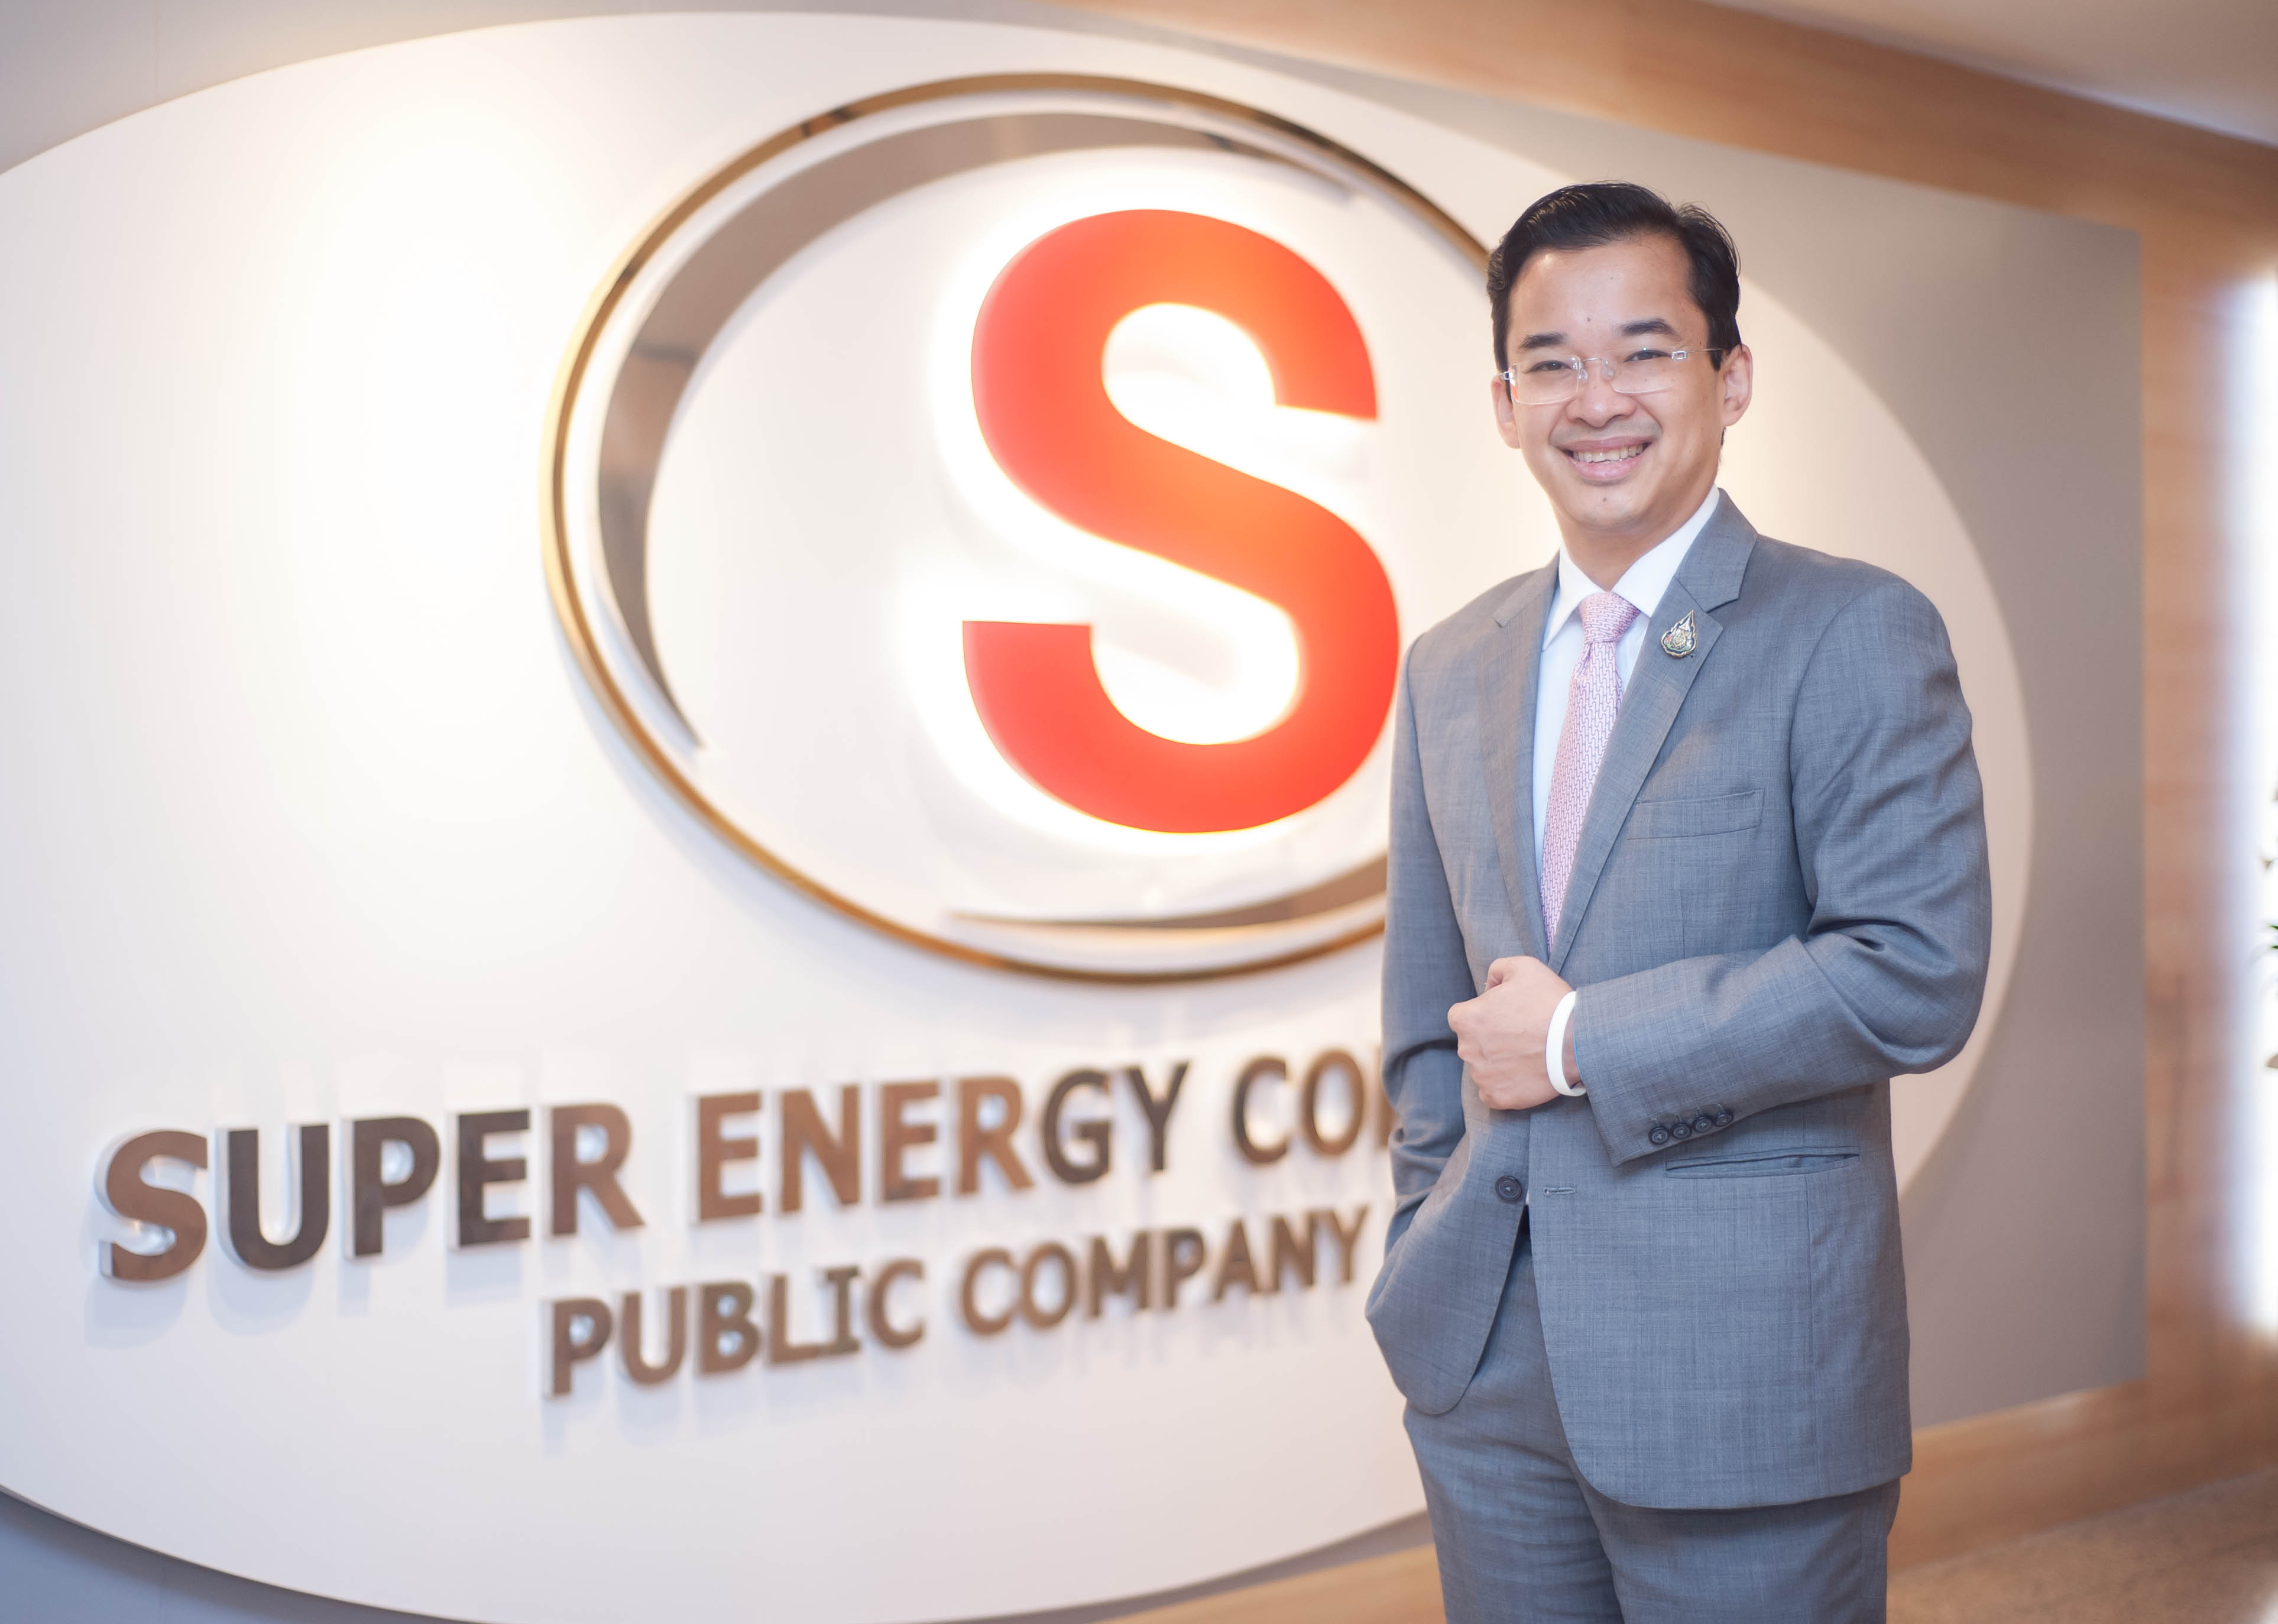 SUPER เฮ! State Bank of Vietnam อนุมัติการขึ้นทะเบียนเงินกู้ตปท. วงเงิน 1.2 พันลบ.โครงการโซลาร์ฟาร์ม Thinh Long เวียดนามขนาด 50 MW หนุนอนาคตขึ้นแท่น ผู้นำพลังงานทดแทนภูมิภาคเอเชีย